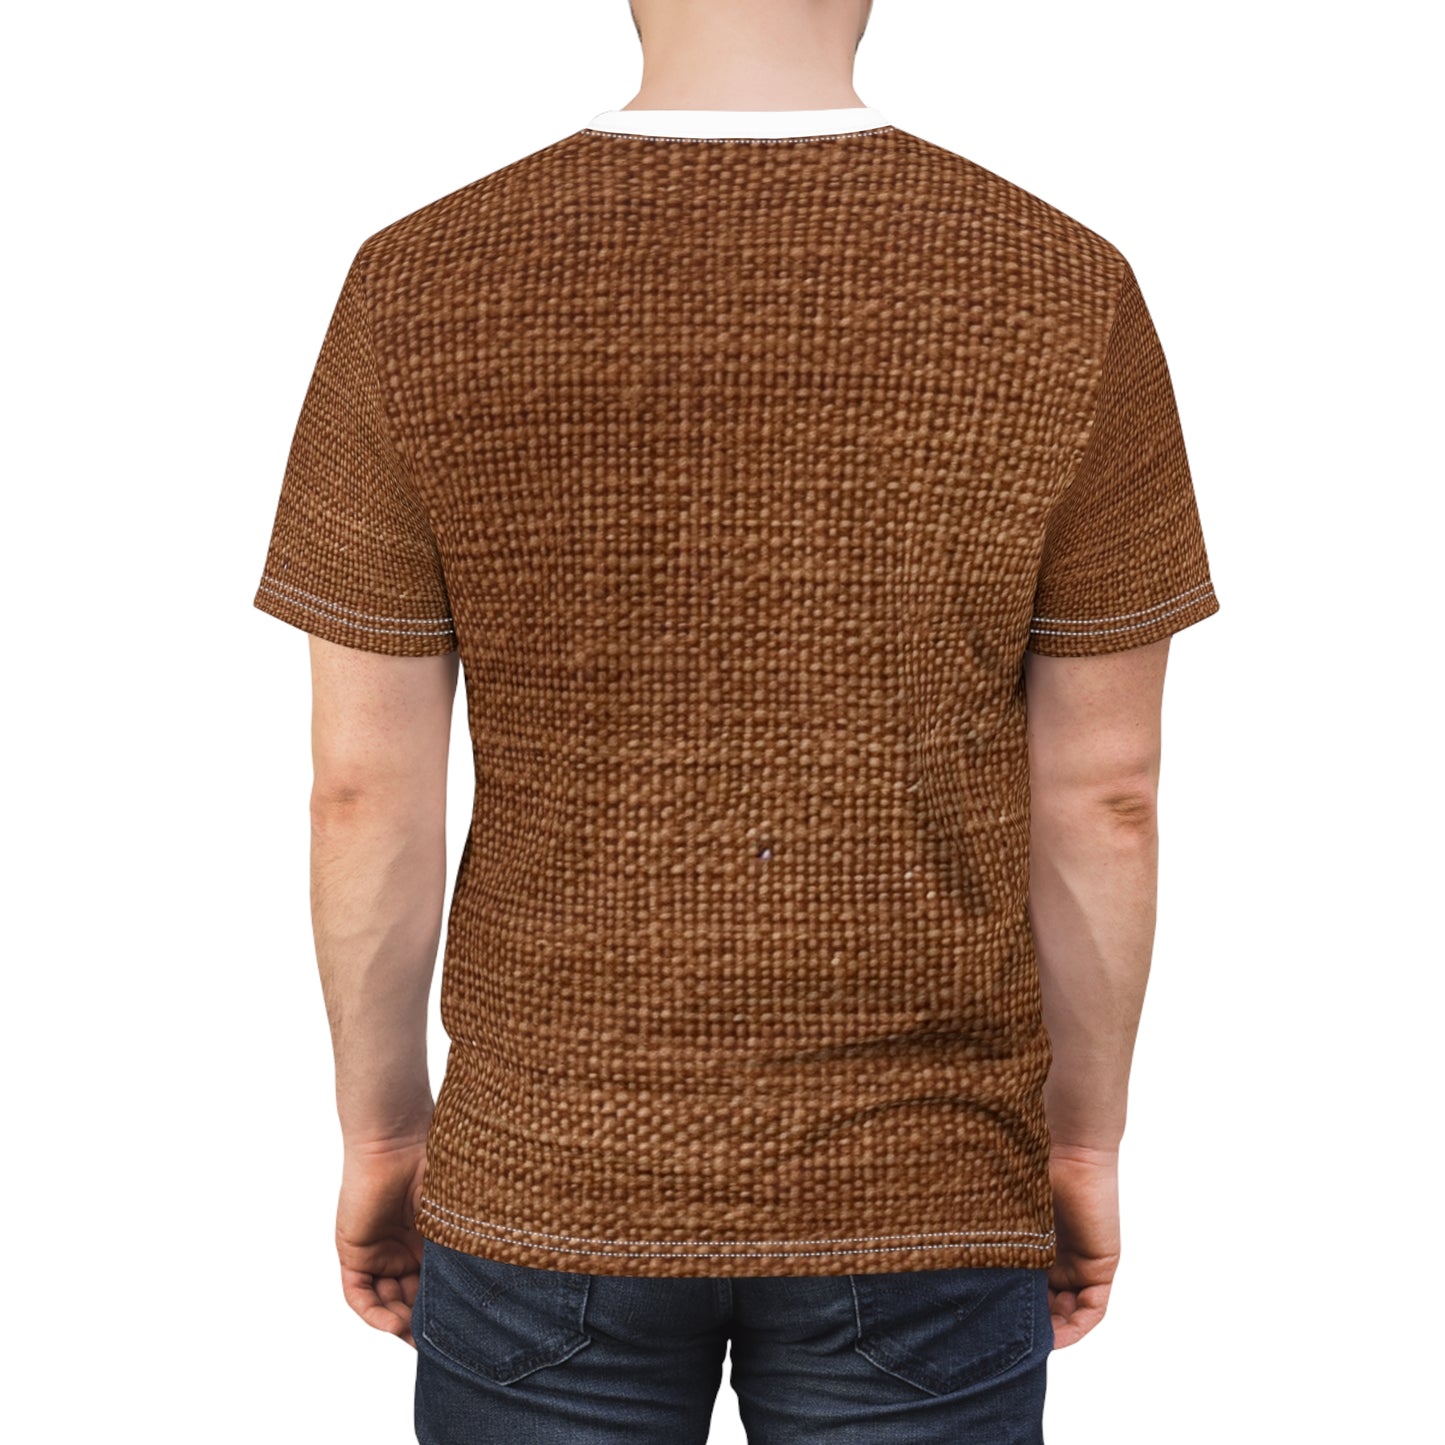 Luxe Dark Brown: Denim-Inspired, Distinctively Textured Fabric - Unisex Cut & Sew Tee (AOP)